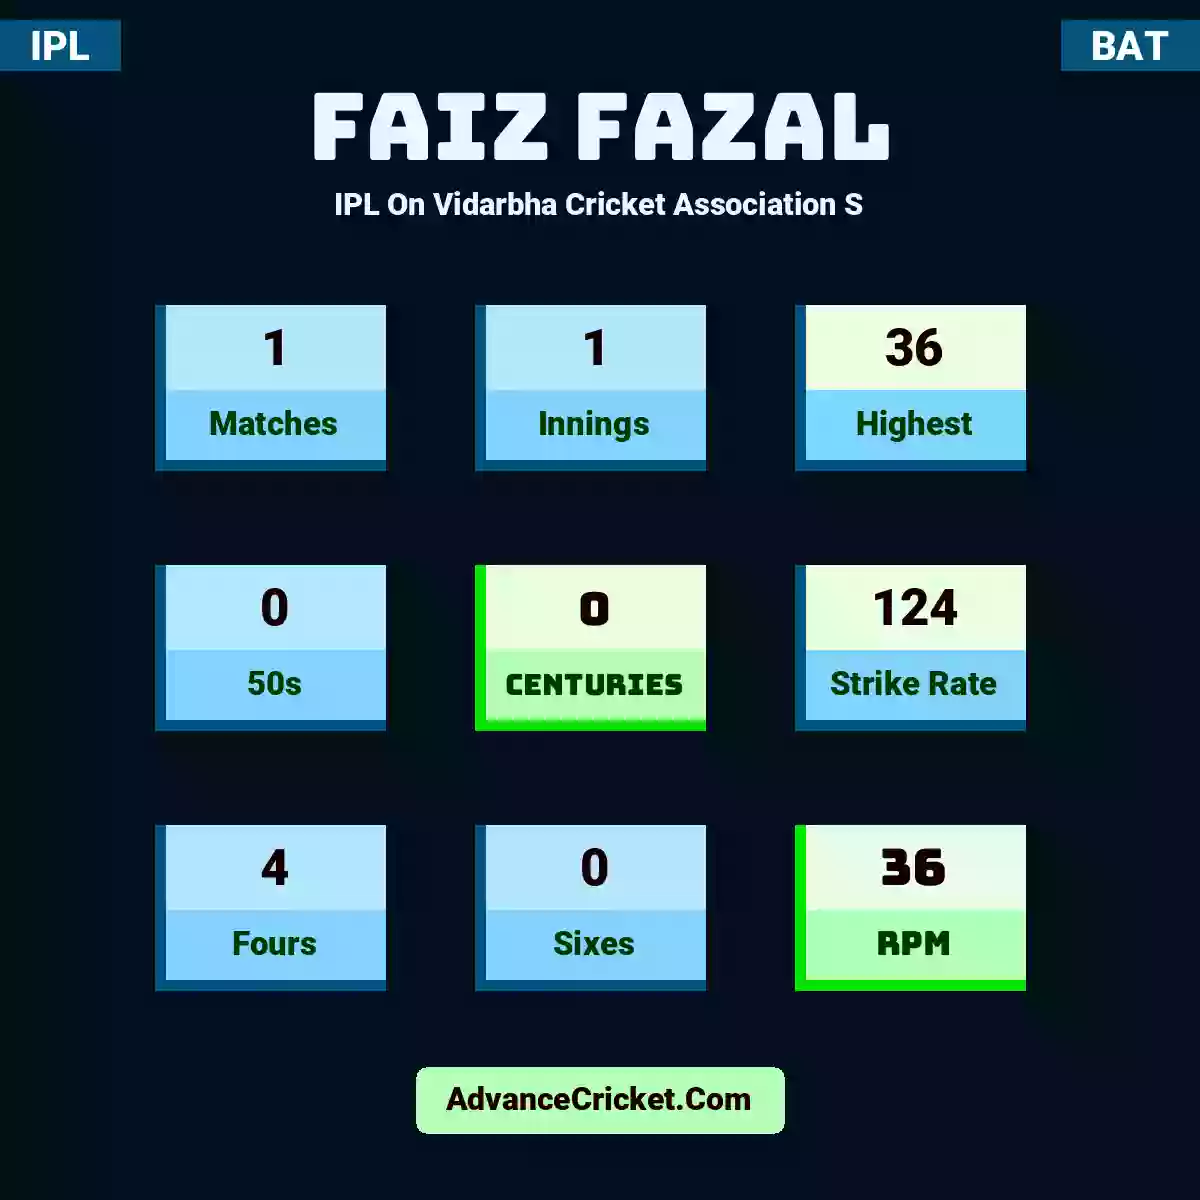 Faiz Fazal IPL  On Vidarbha Cricket Association S, Faiz Fazal played 1 matches, scored 36 runs as highest, 0 half-centuries, and 0 centuries, with a strike rate of 124. F.Fazal hit 4 fours and 0 sixes, with an RPM of 36.